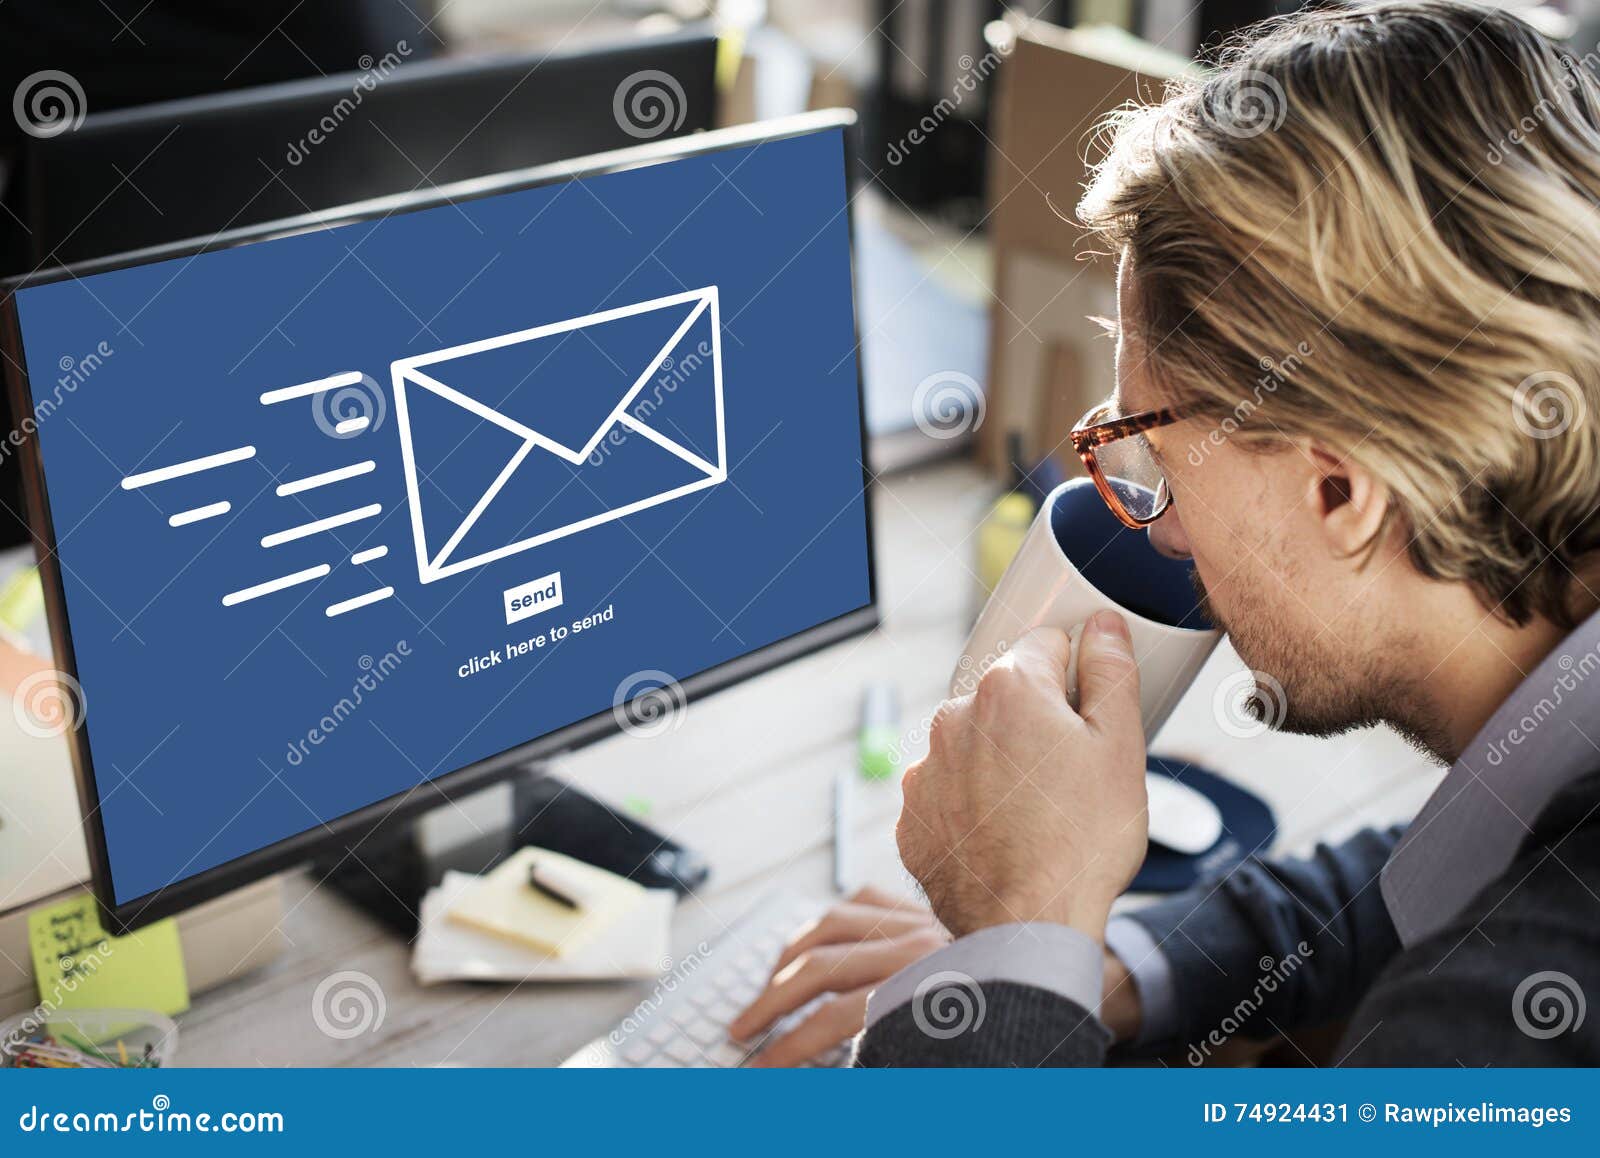 messaging email send envelope communication concept